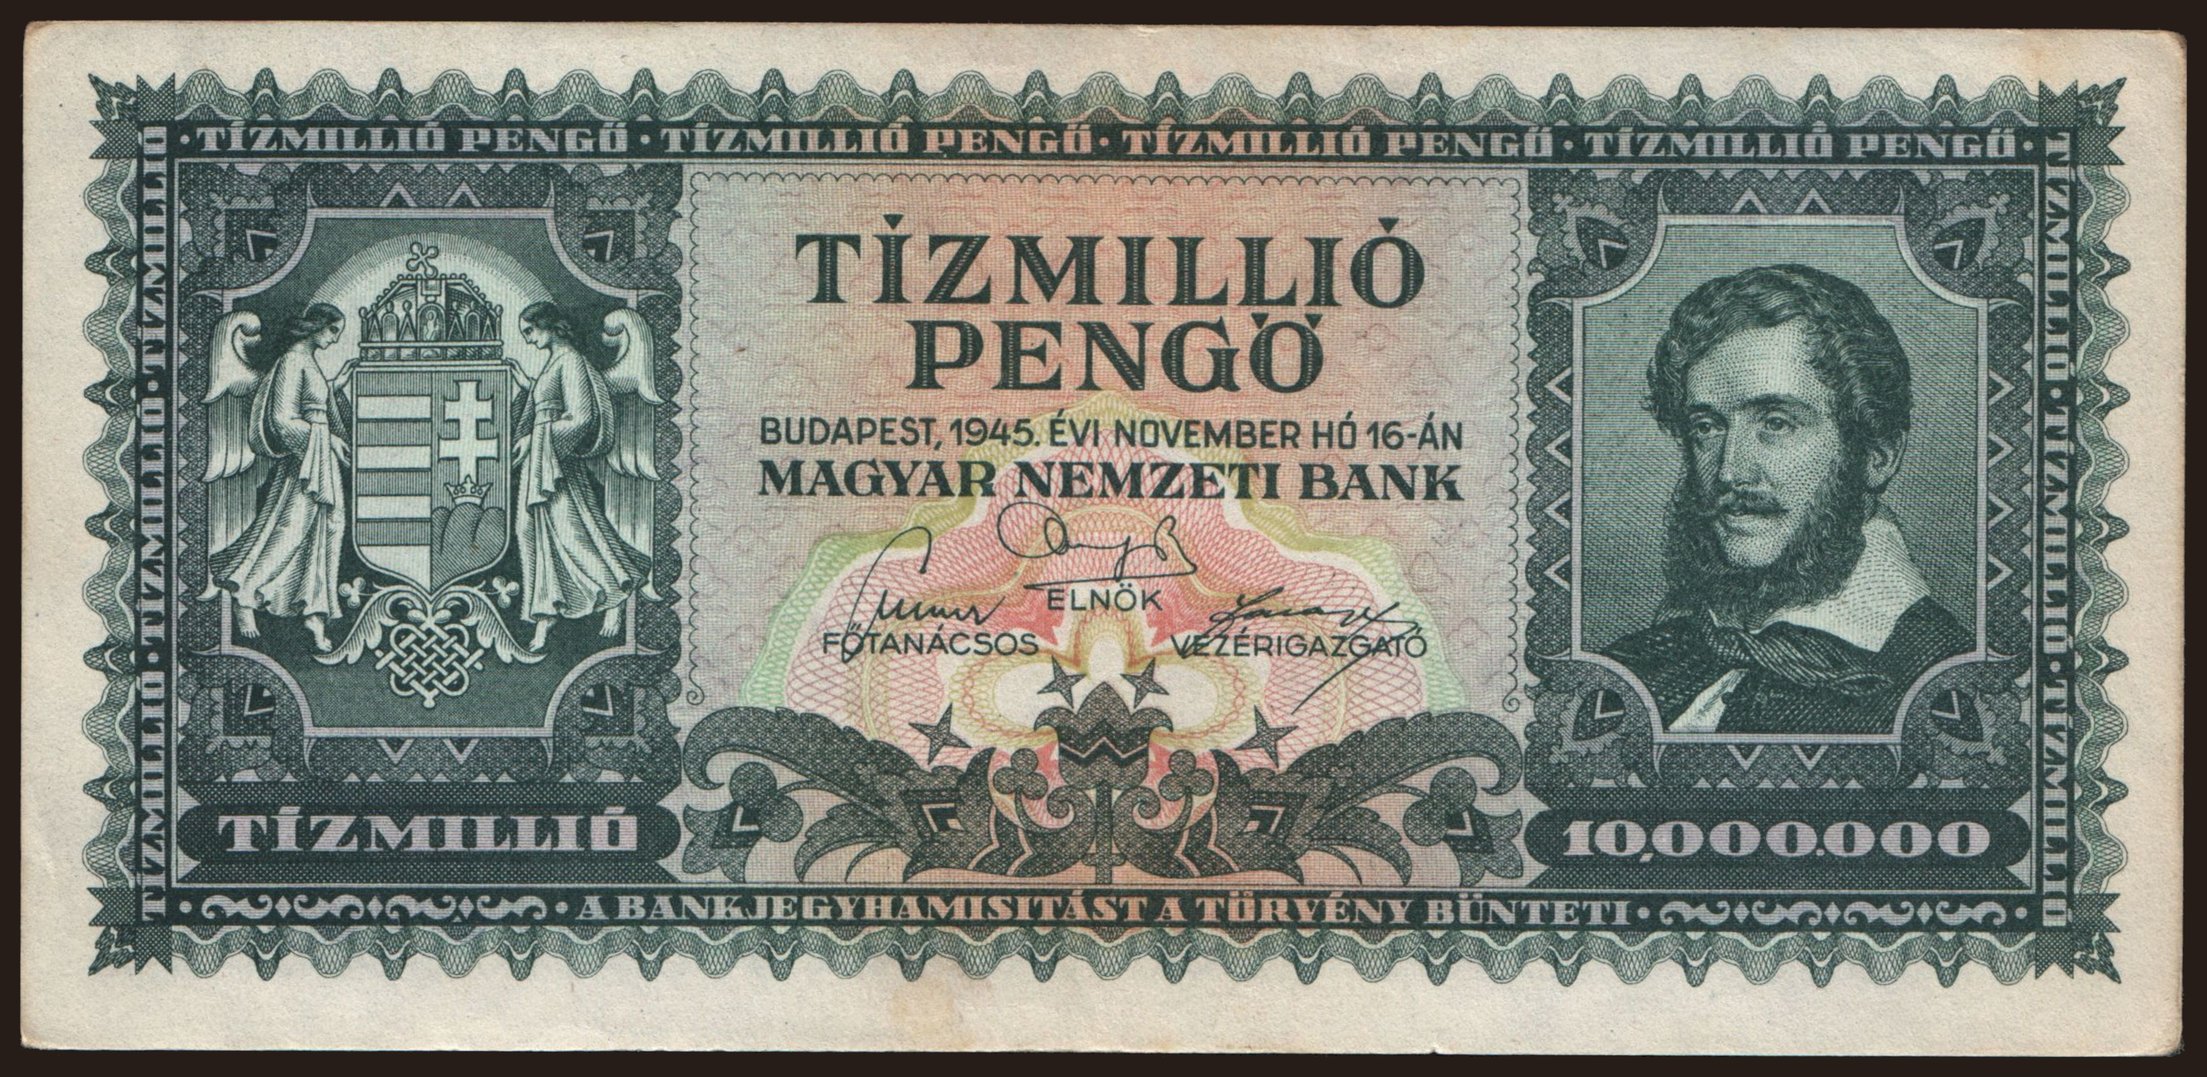 10.000.000 pengő, 1945